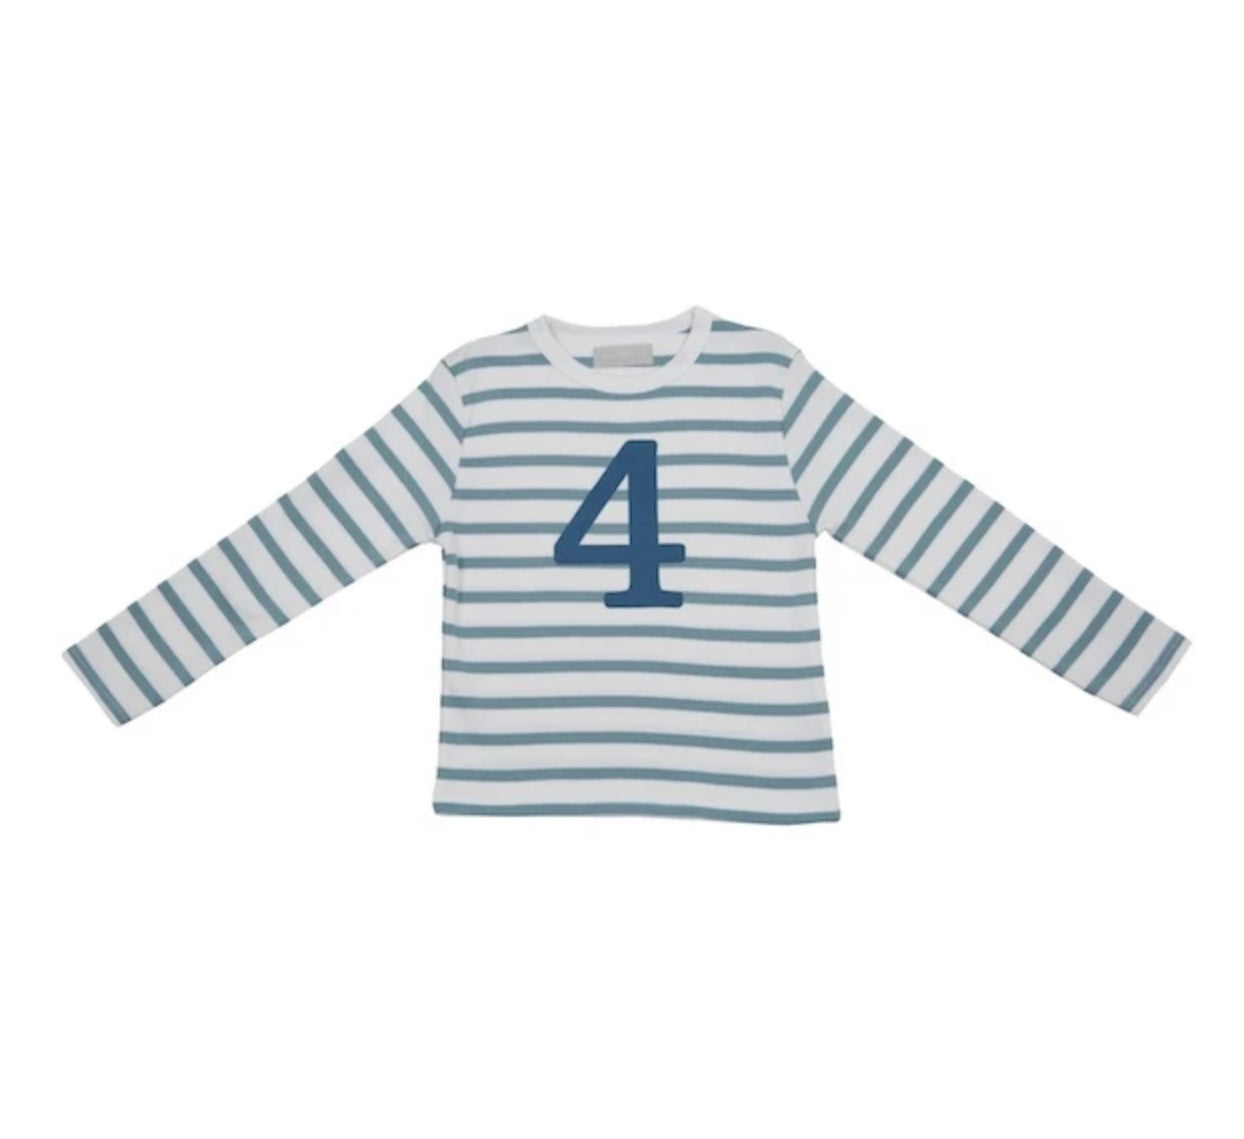 Age 4 Ocean Blue and White Breton Striped T-Shirt